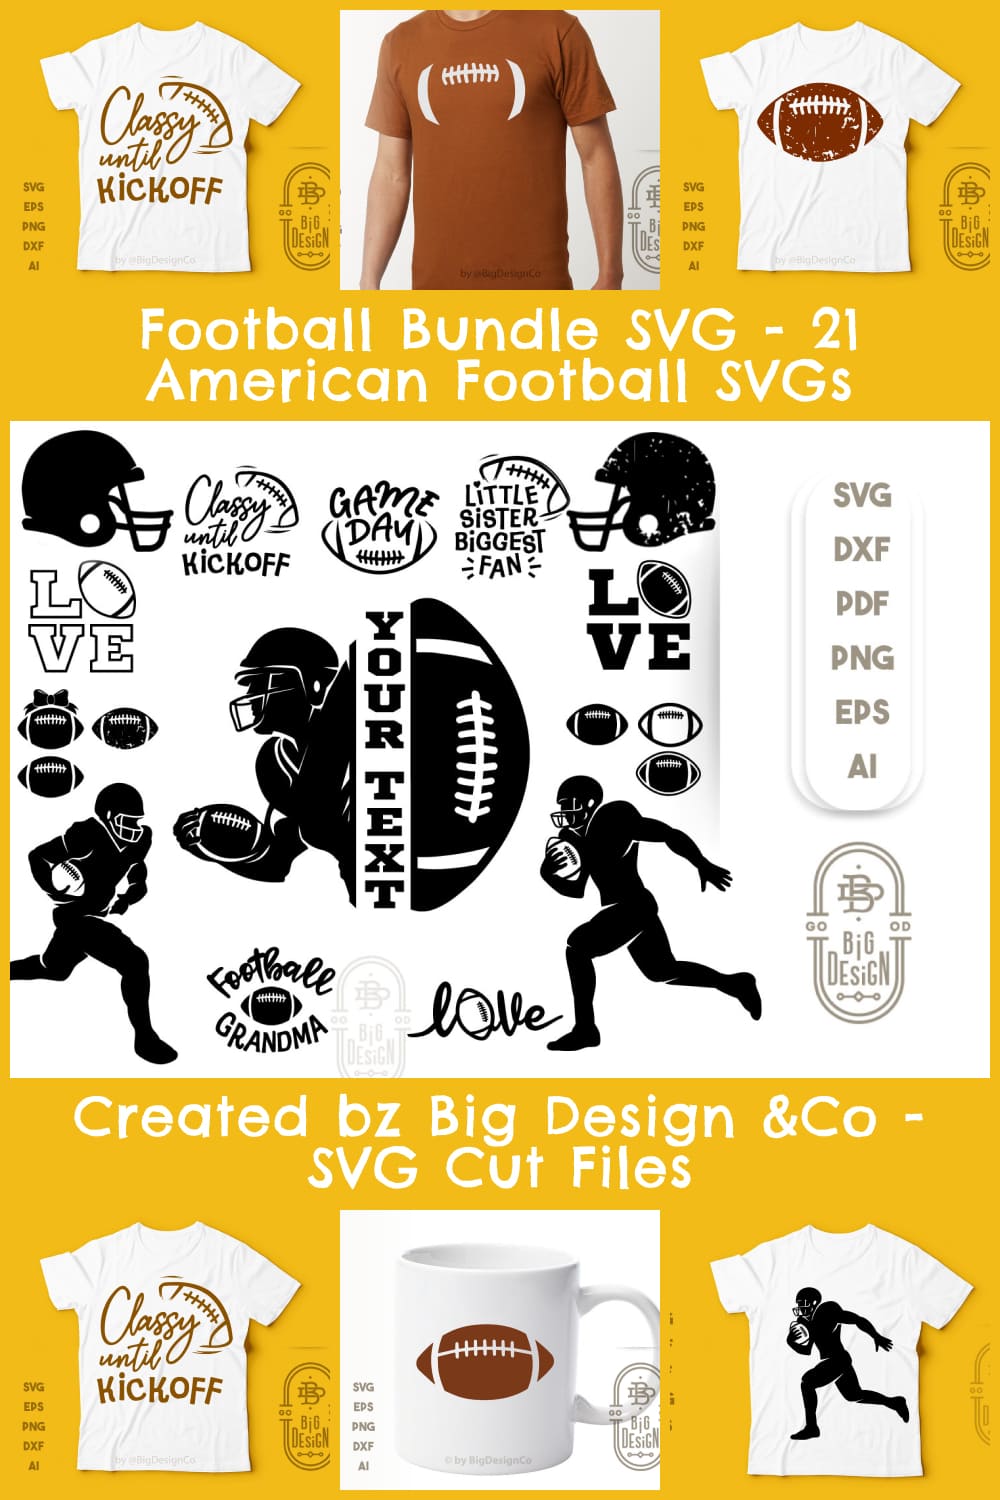 Football Bundle SVG - 21 American Football SVGs.